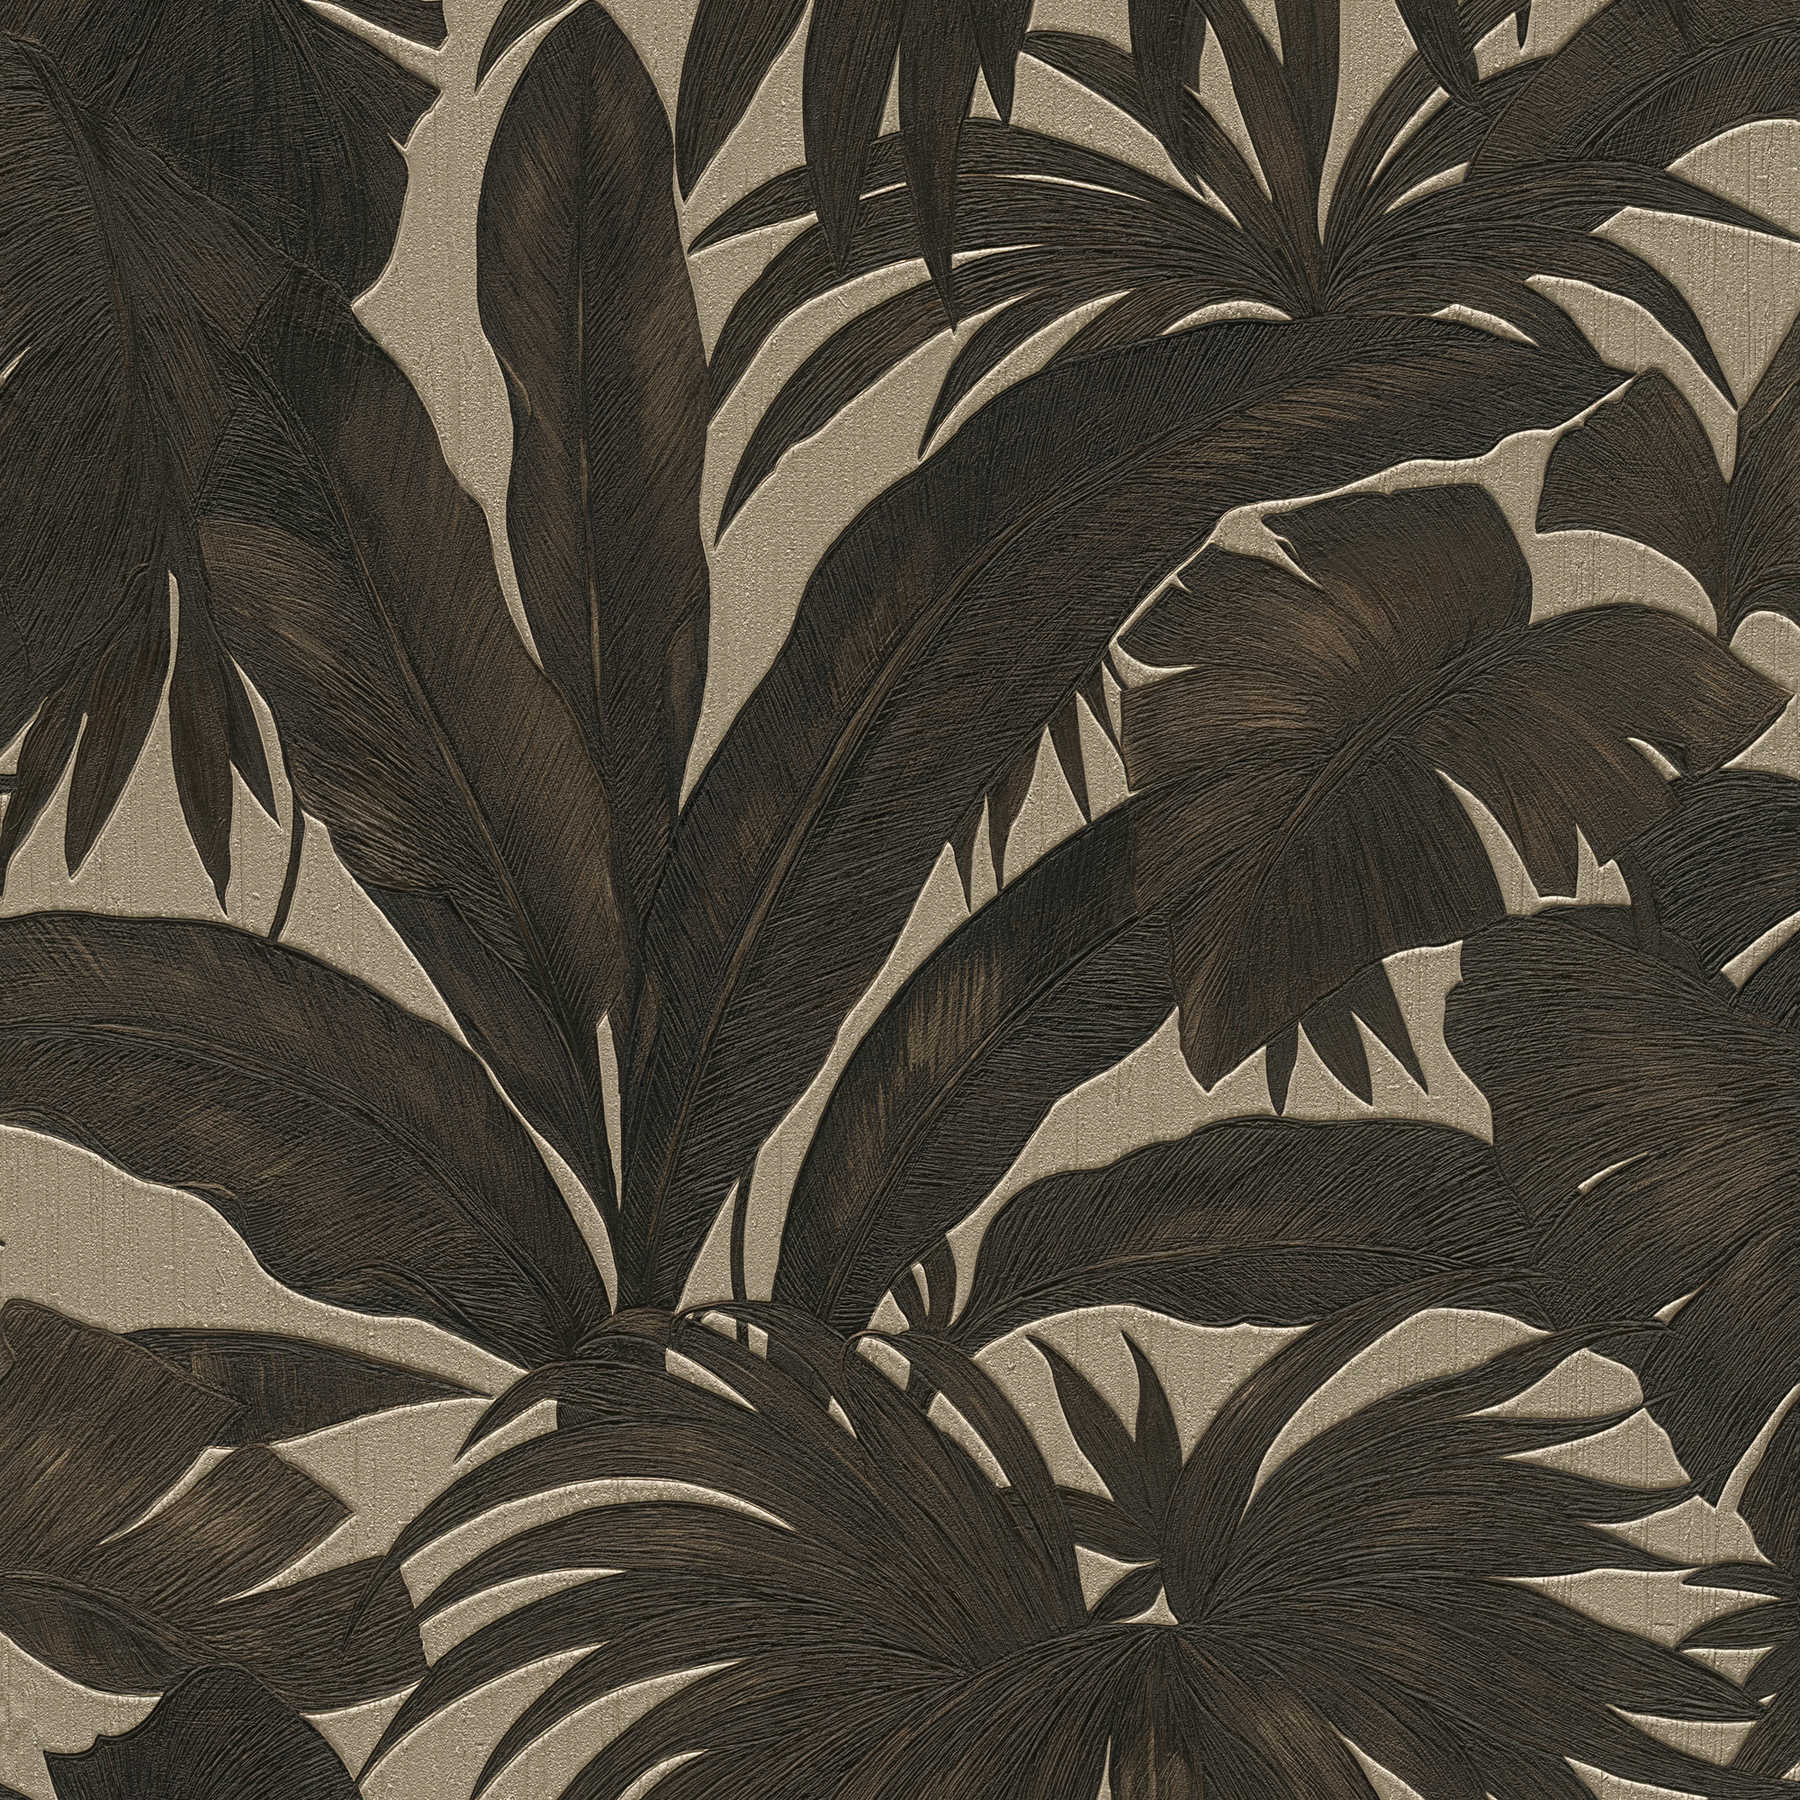 VERSACE wallpaper palm trees & metallic effect - Brown, Metallic
